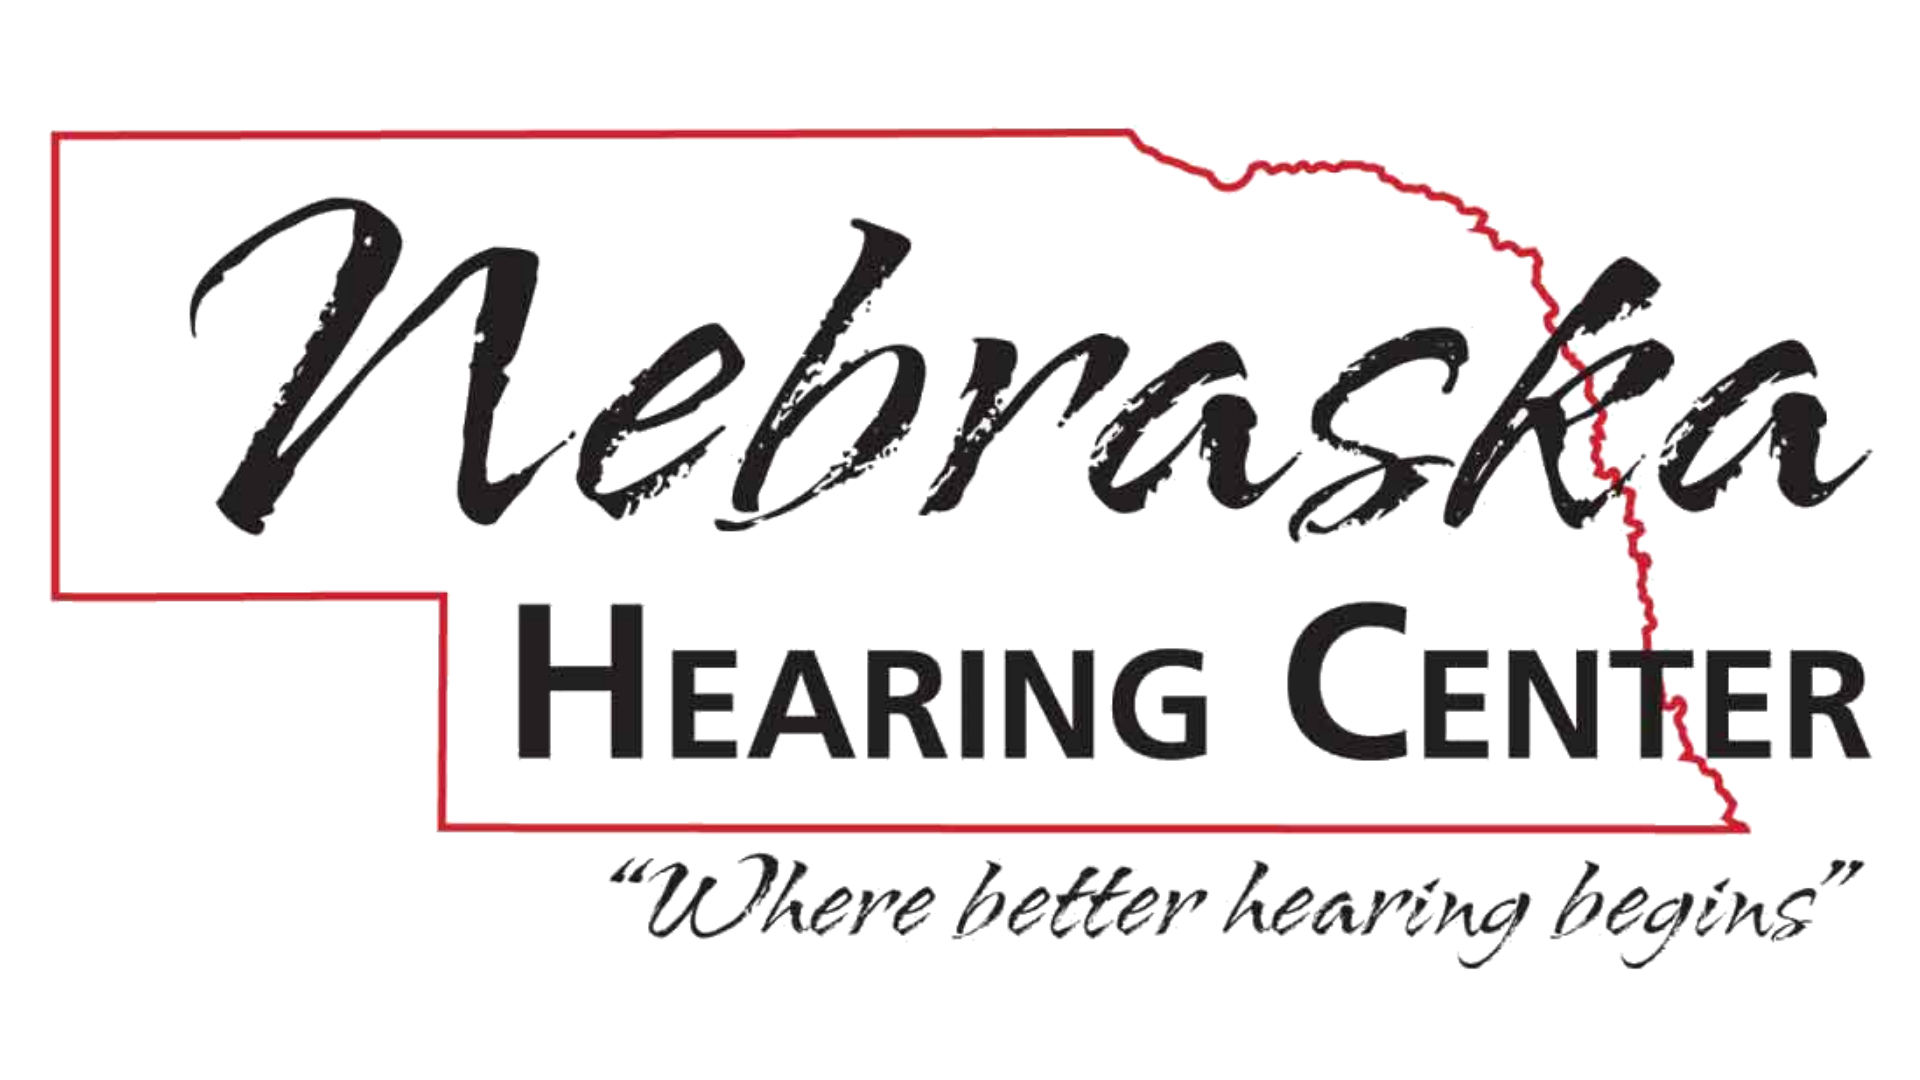 Nebraska Hearing Center